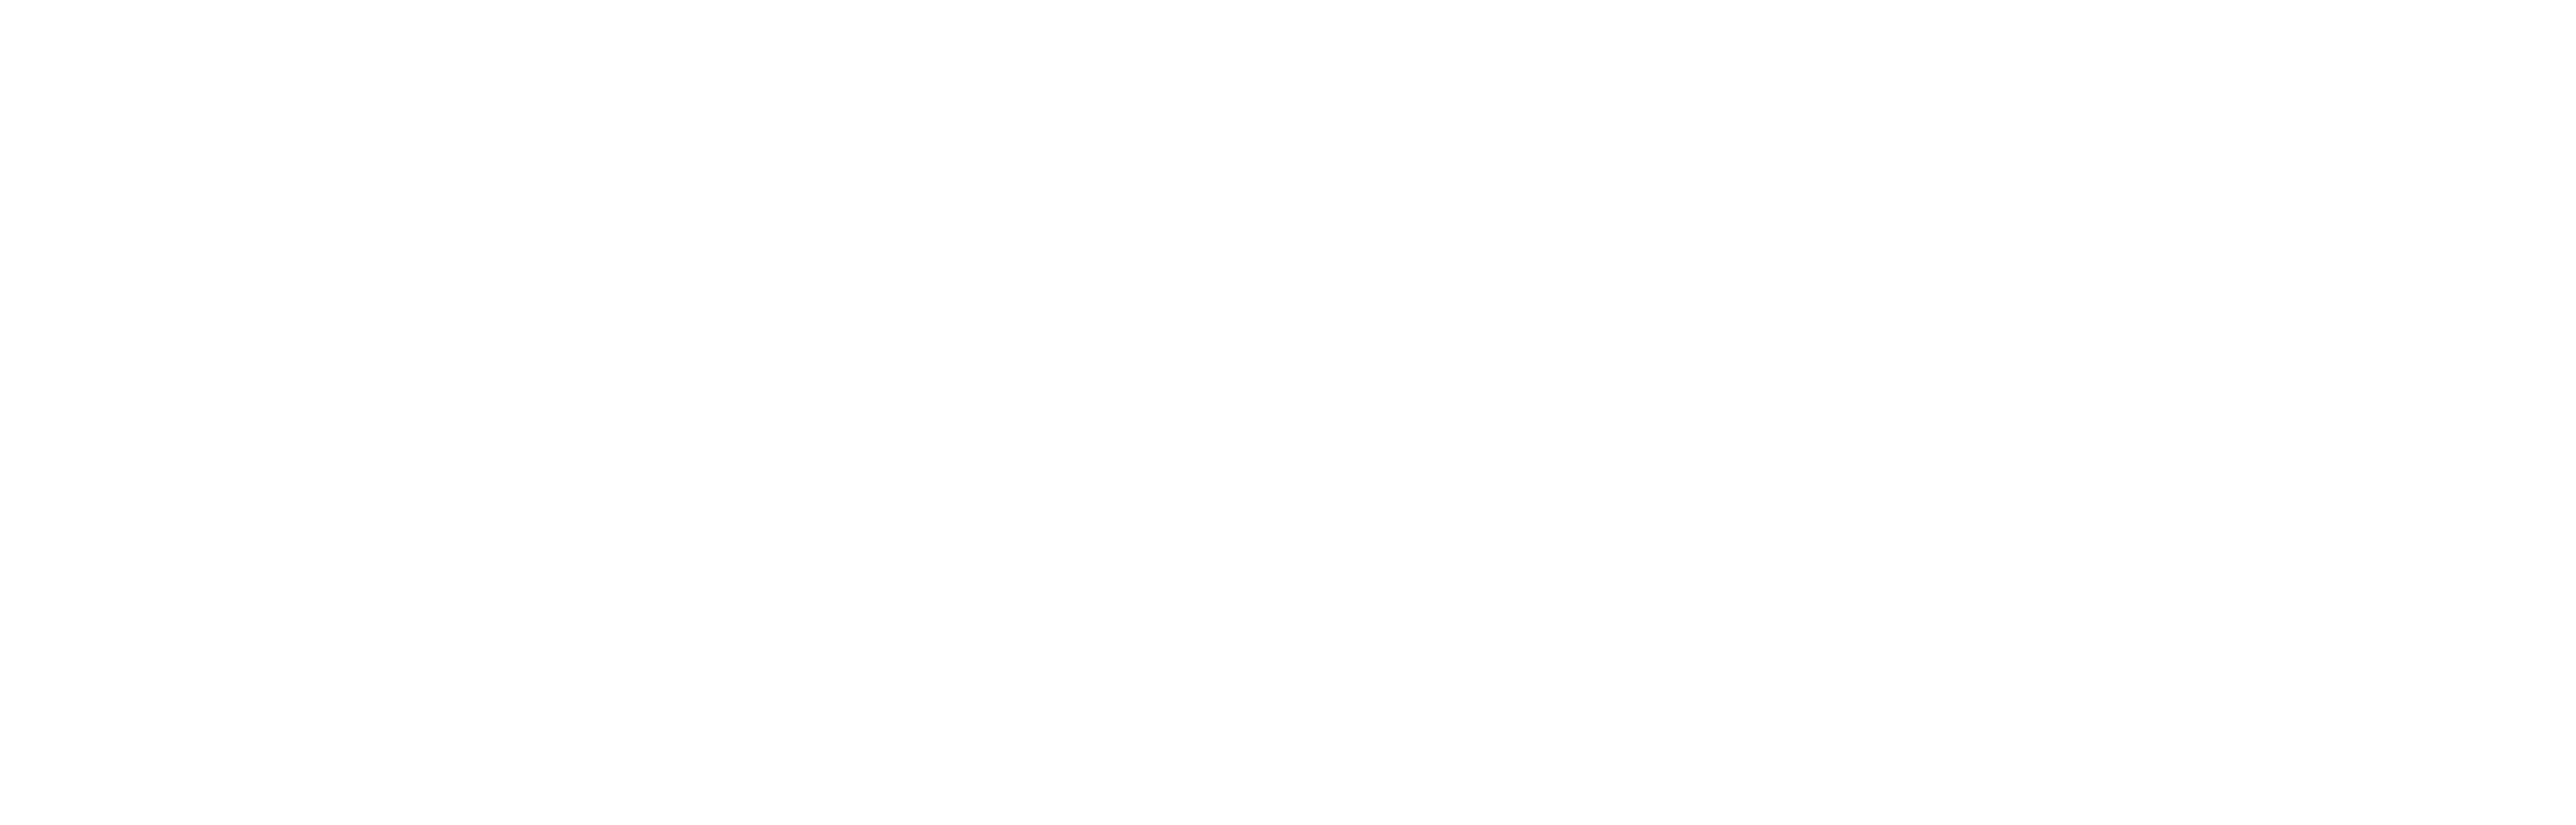 Colombiacheck